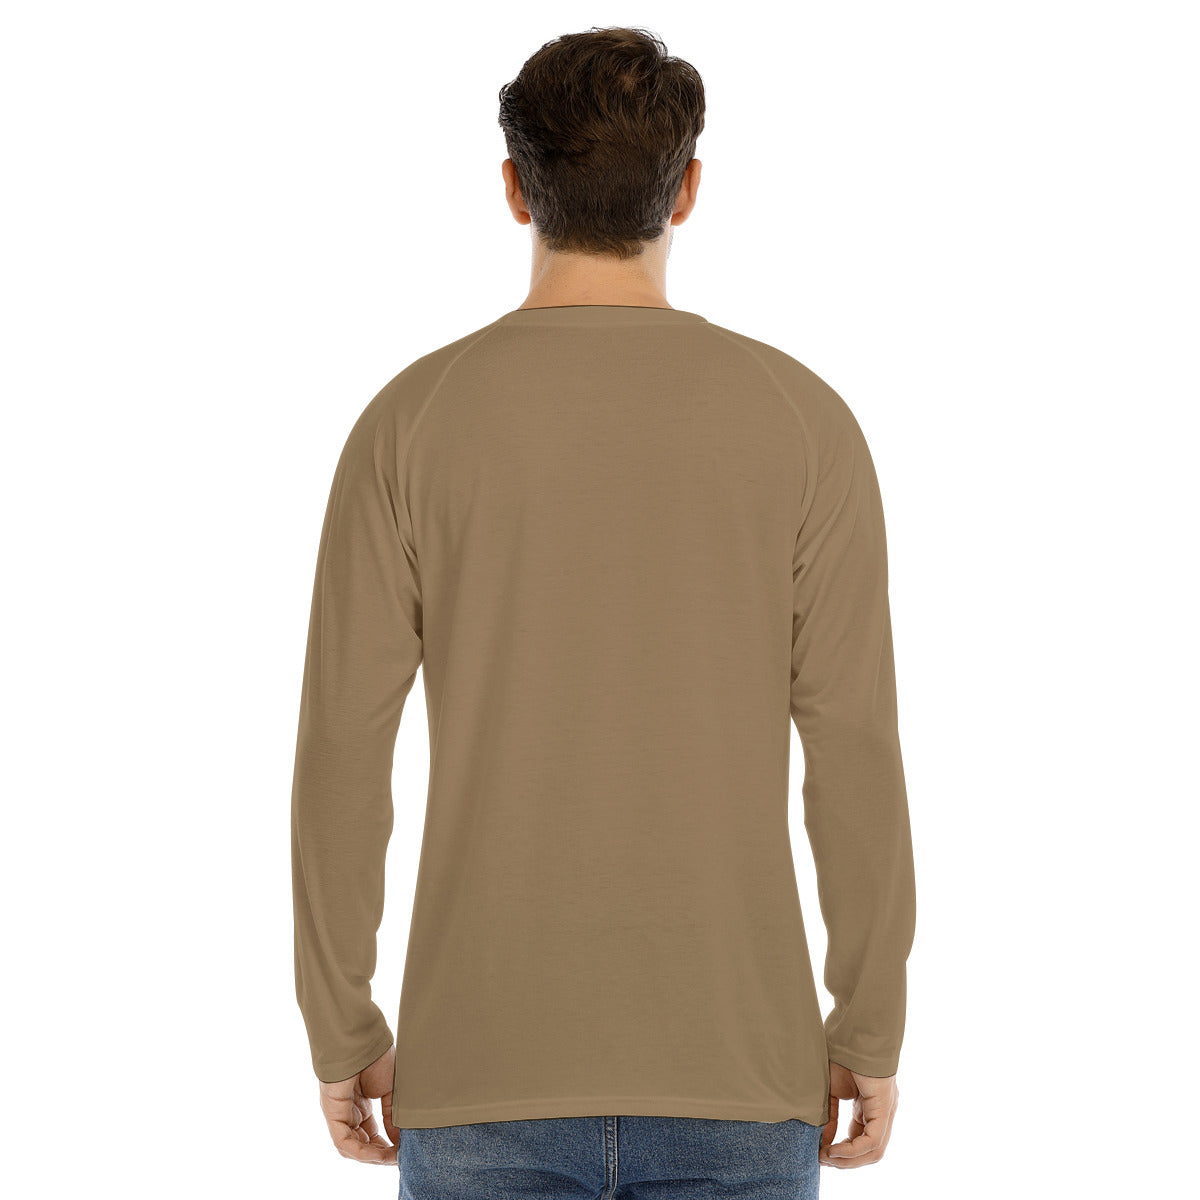 Chichen Itza 102 -- Men's Long Sleeve T-shirt With Raglan Sleeve